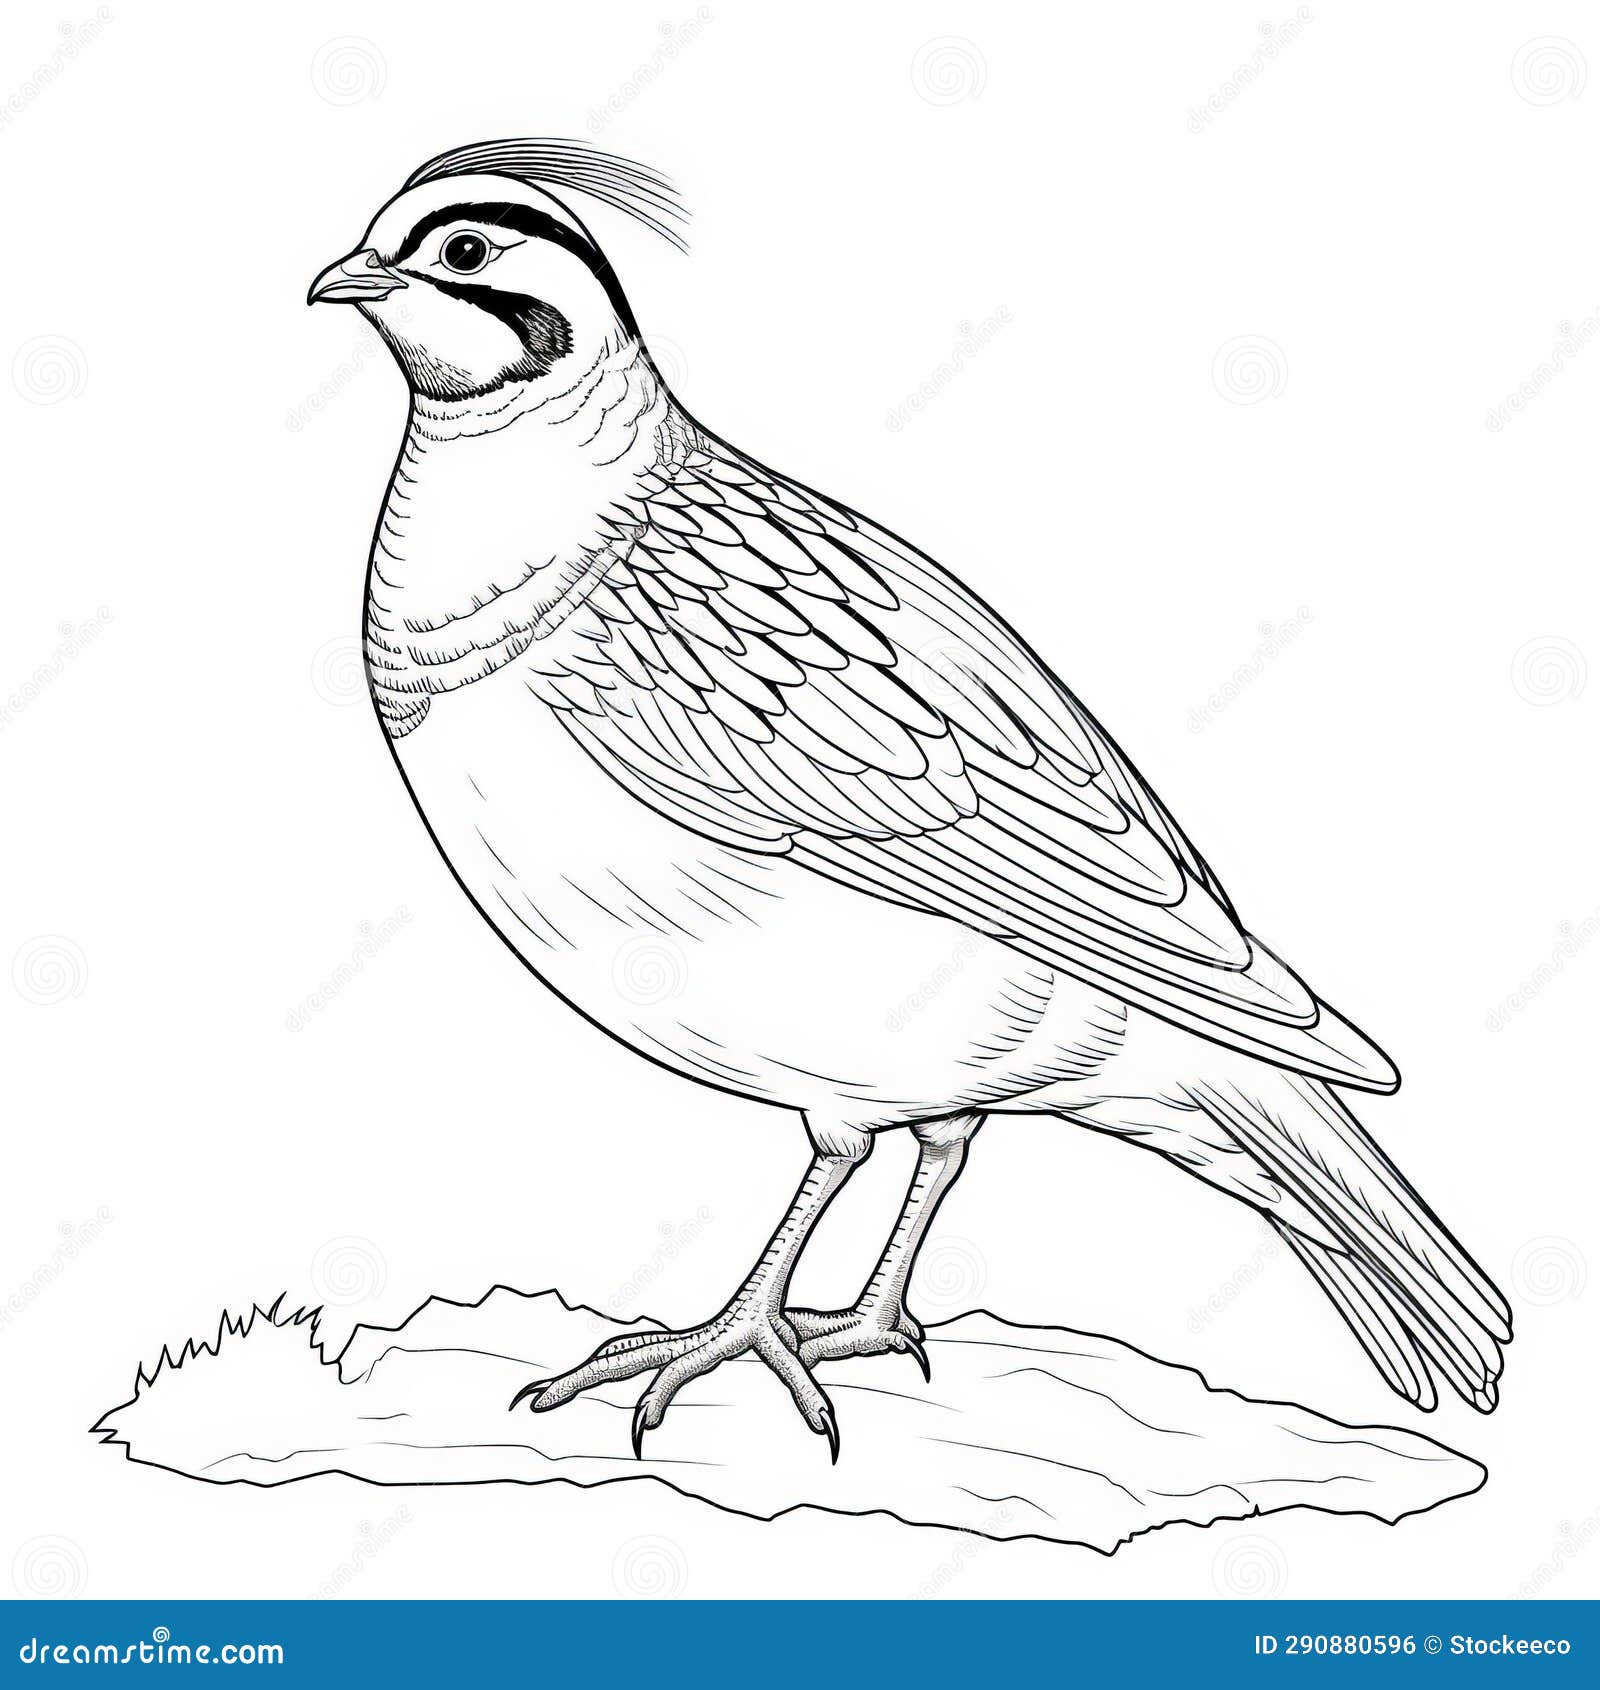 Quail coloring sheet stock illustrations â quail coloring sheet stock illustrations vectors clipart